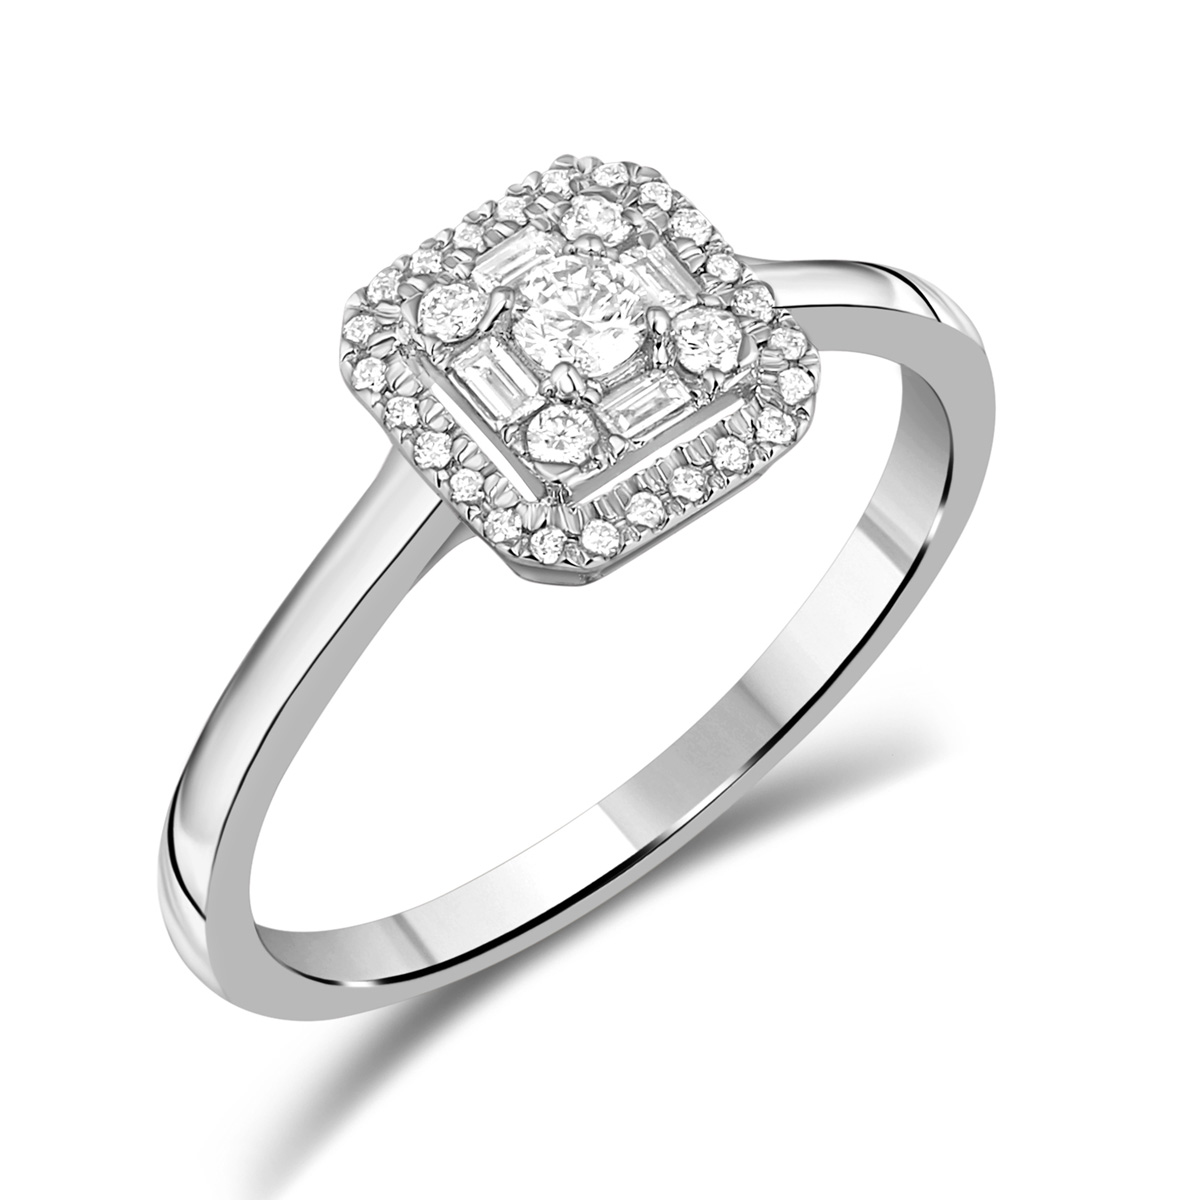 HE52827QWD4WN
14K White Gold Fancy cut diamond ring